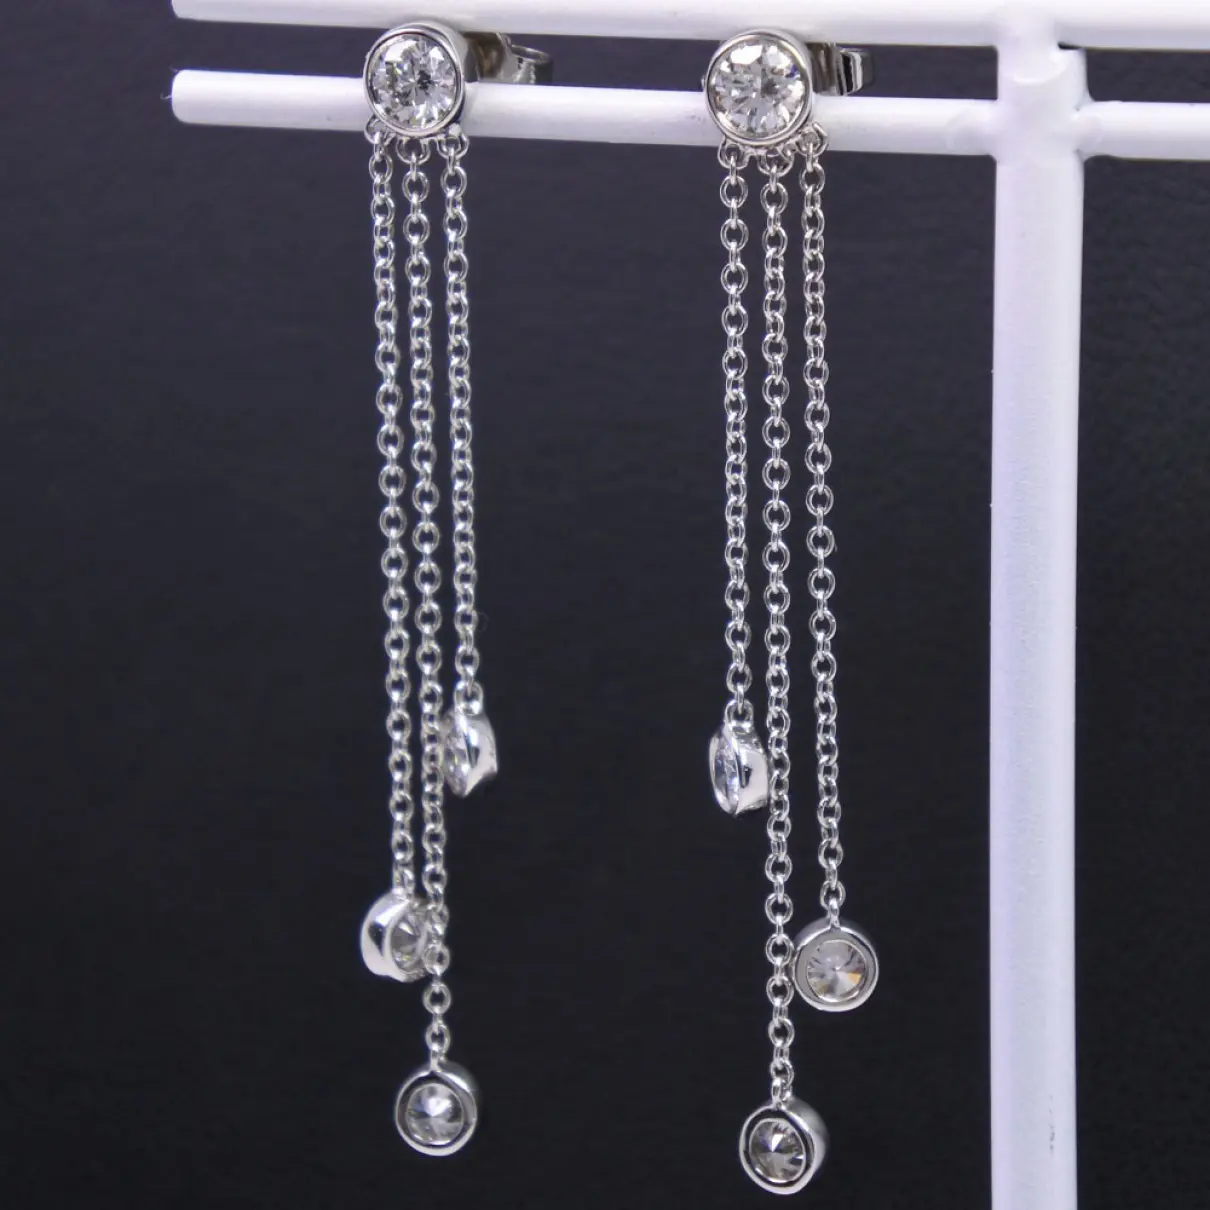 Buy Tiffany & Co Platinum earrings online